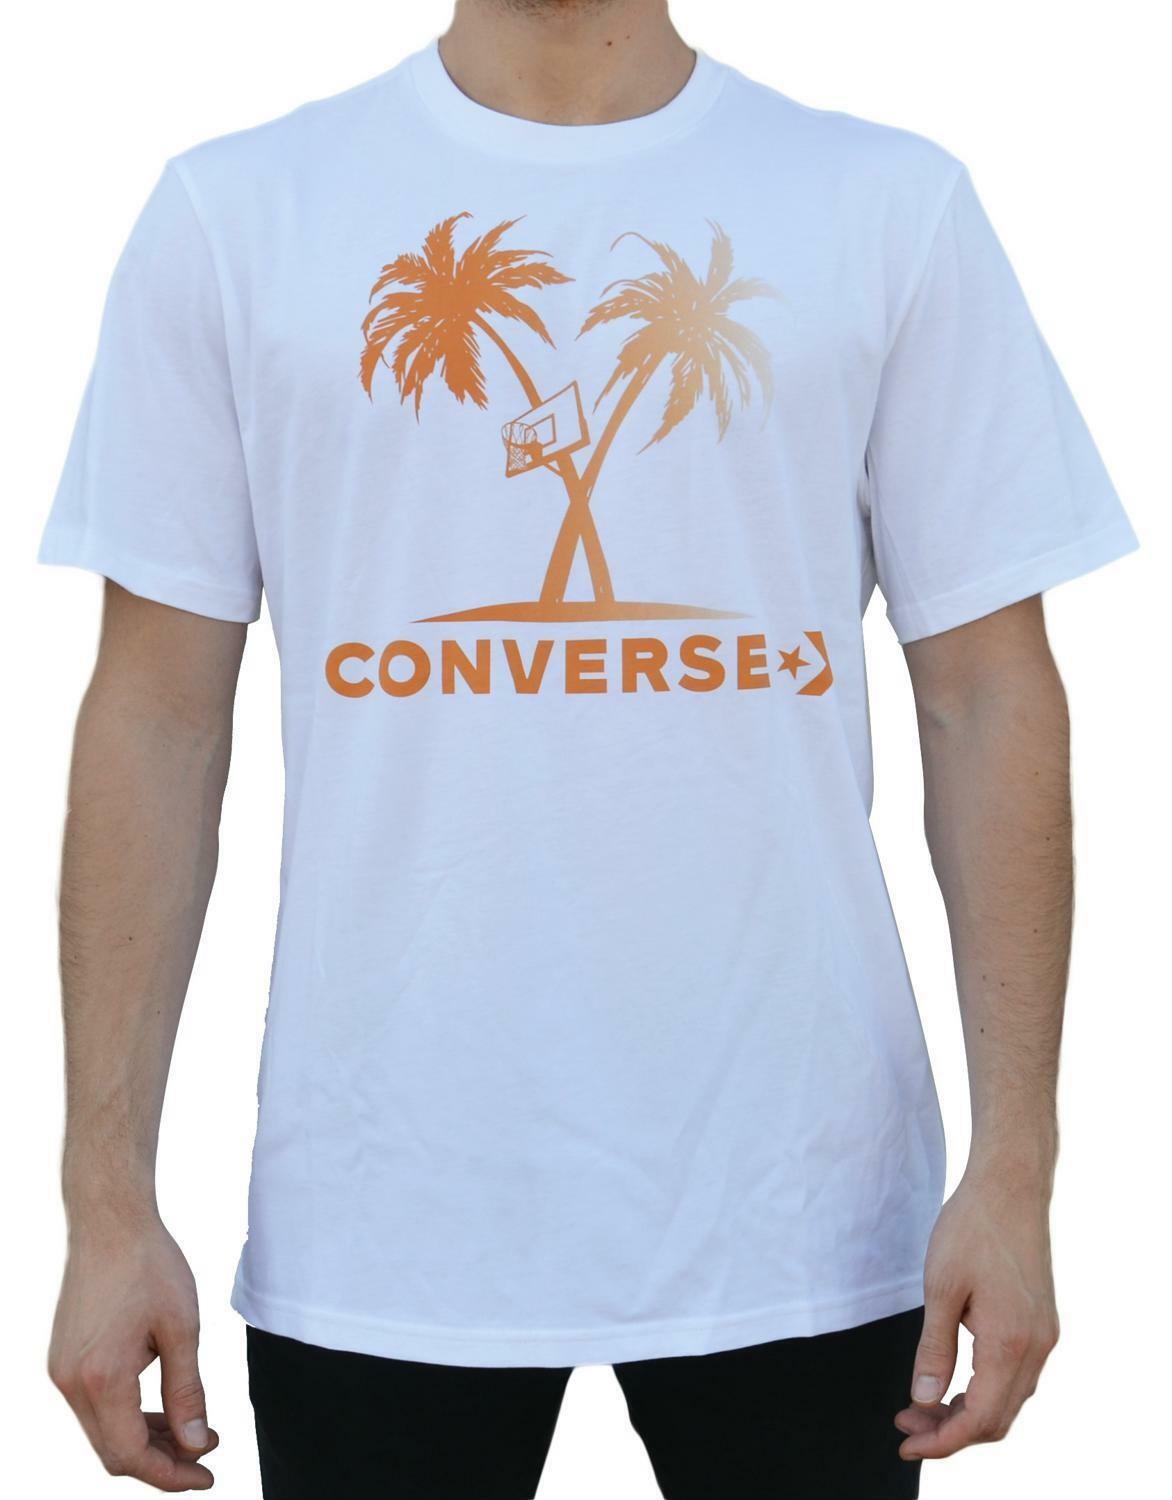 converse converse palm trees t-shirt uomo bianca 5907a03